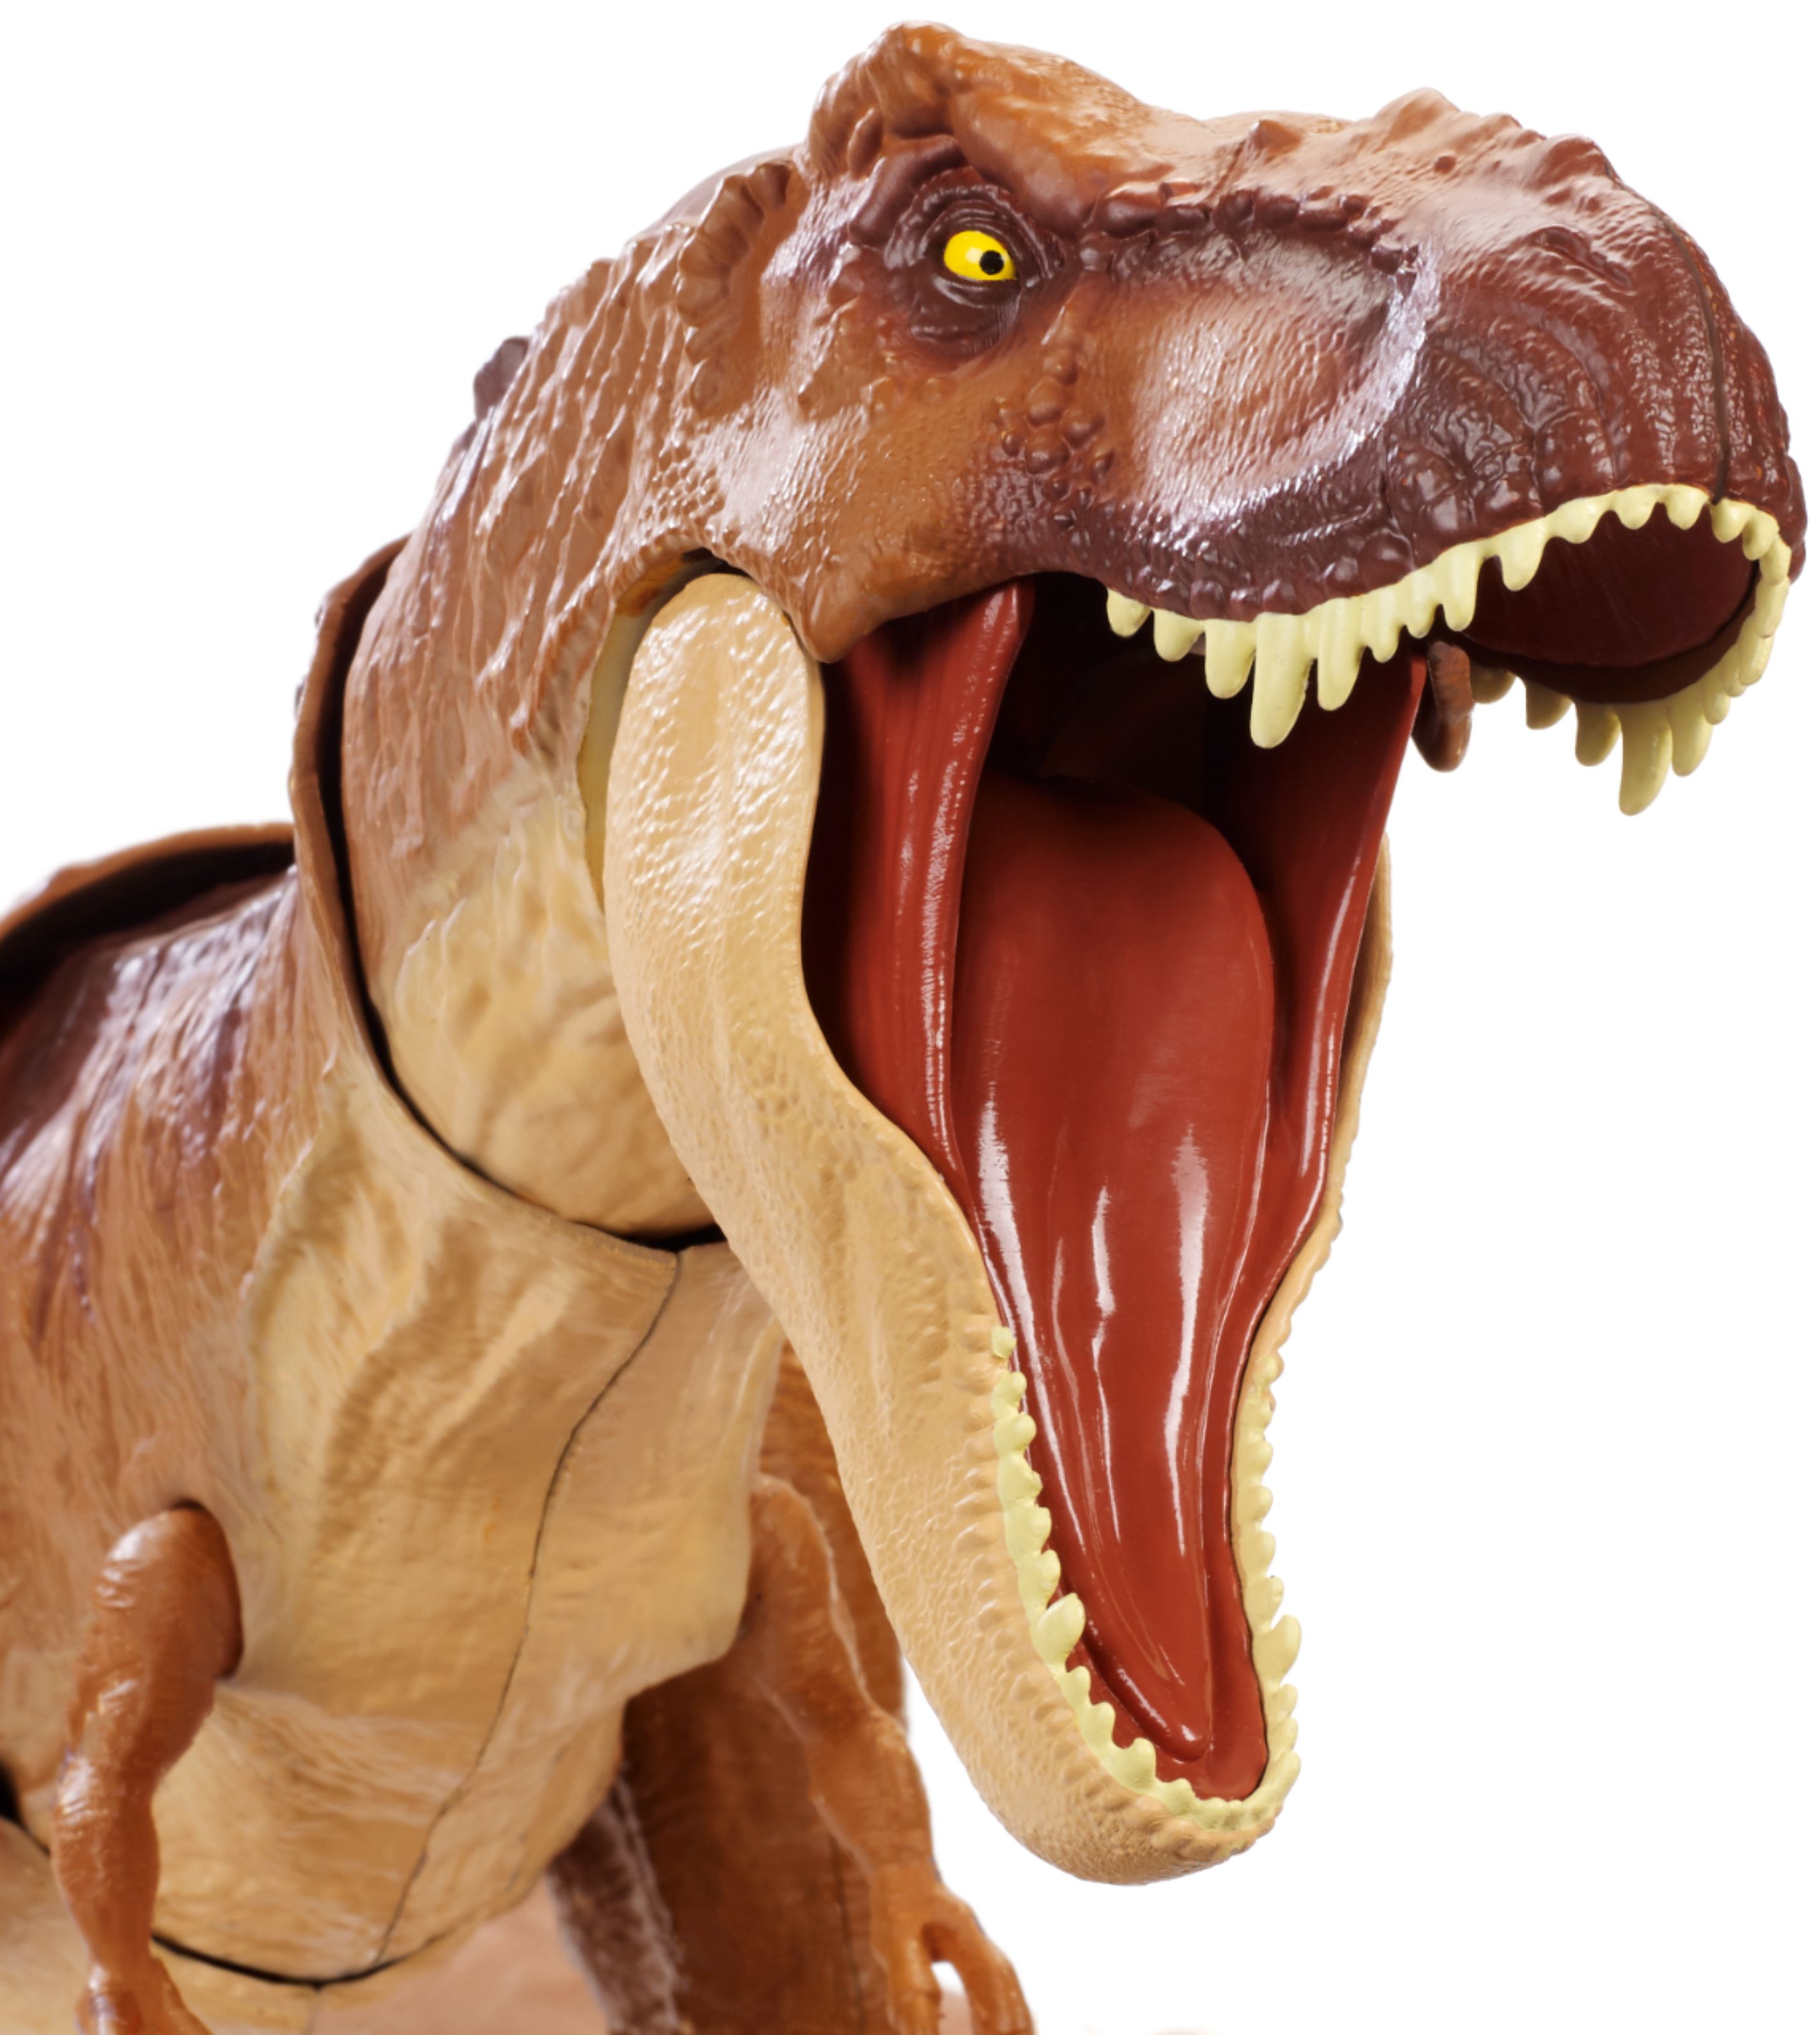 FMY70 Jurassic World Thrash 'n Throw Tyrannosaurus Rex Action Figure 